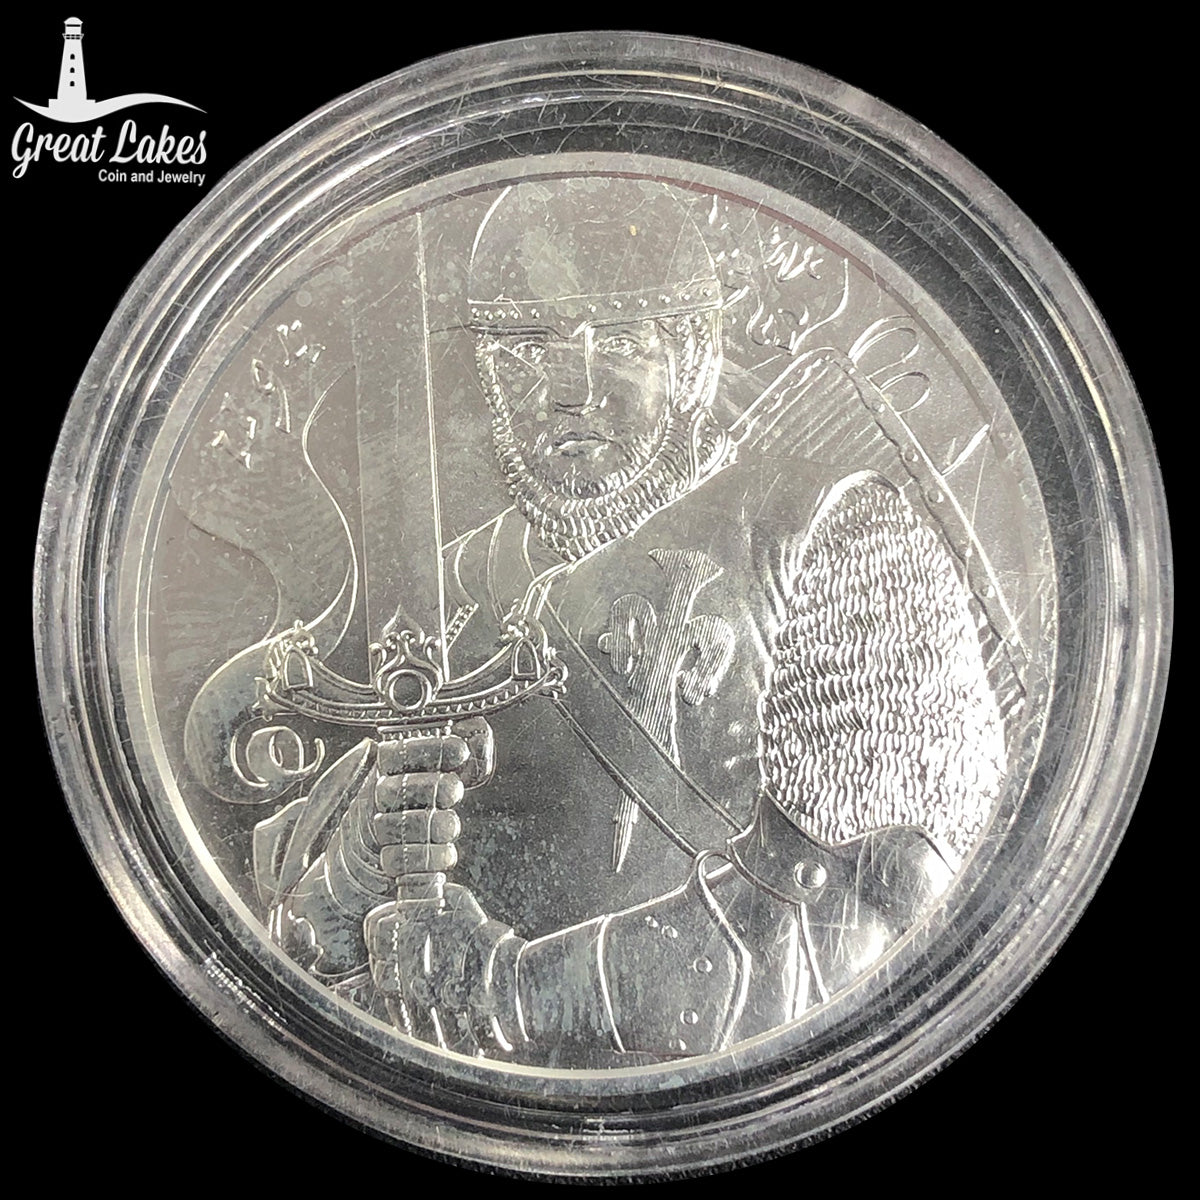 2019 Austrian Leopold V 1 oz Silver Coin